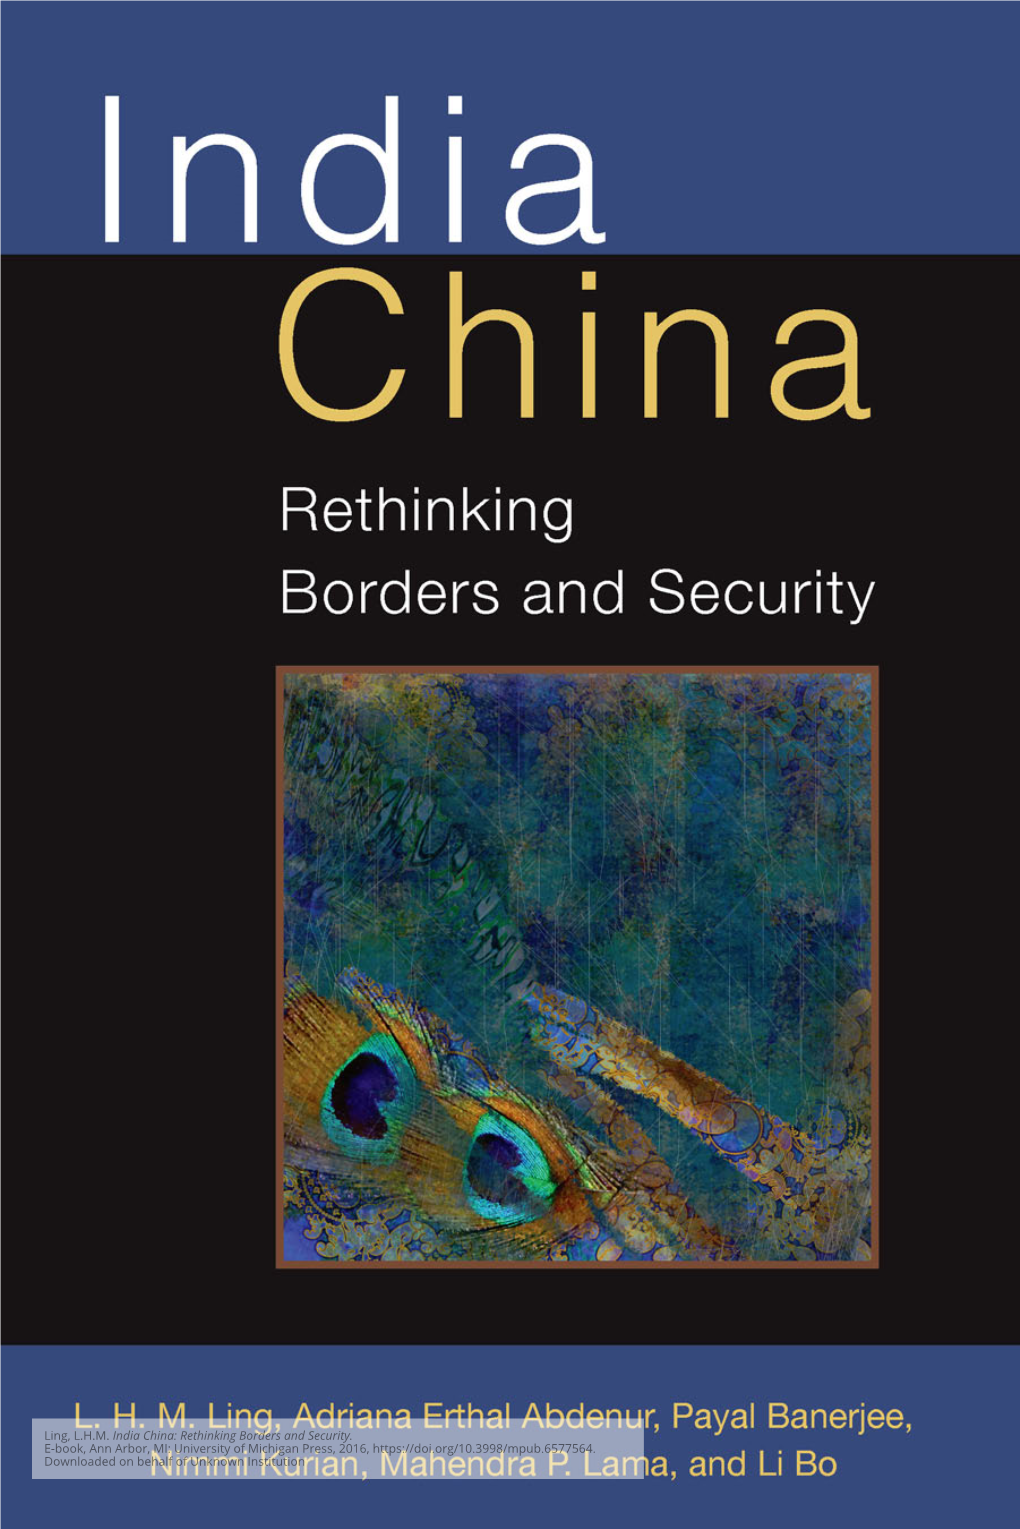 India China: Rethinking Borders and Security